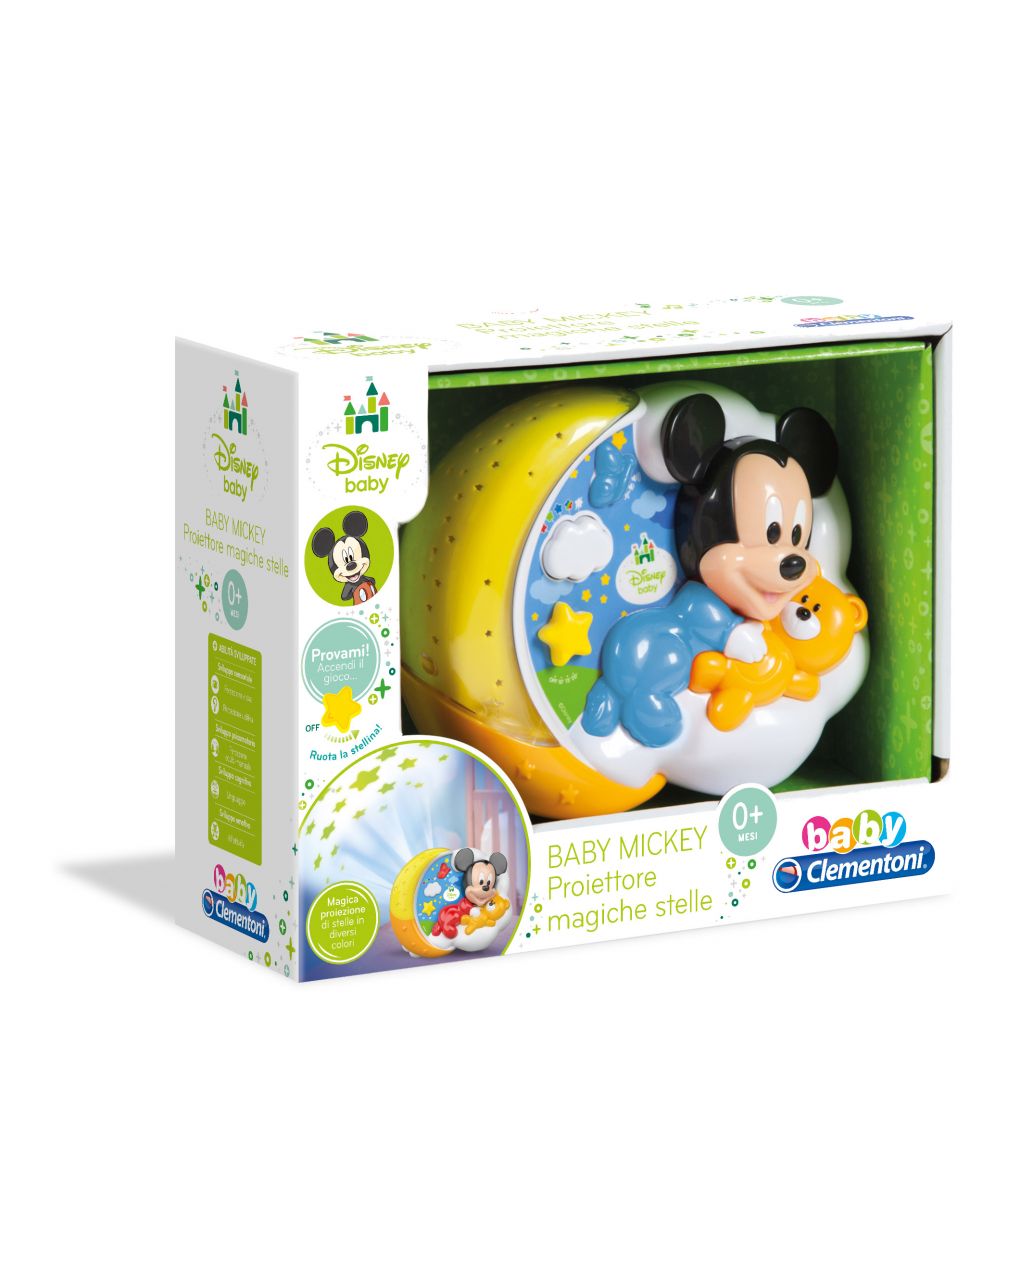 Disney baby - estrelas mágicas do projetor bebê mickey - Clementoni